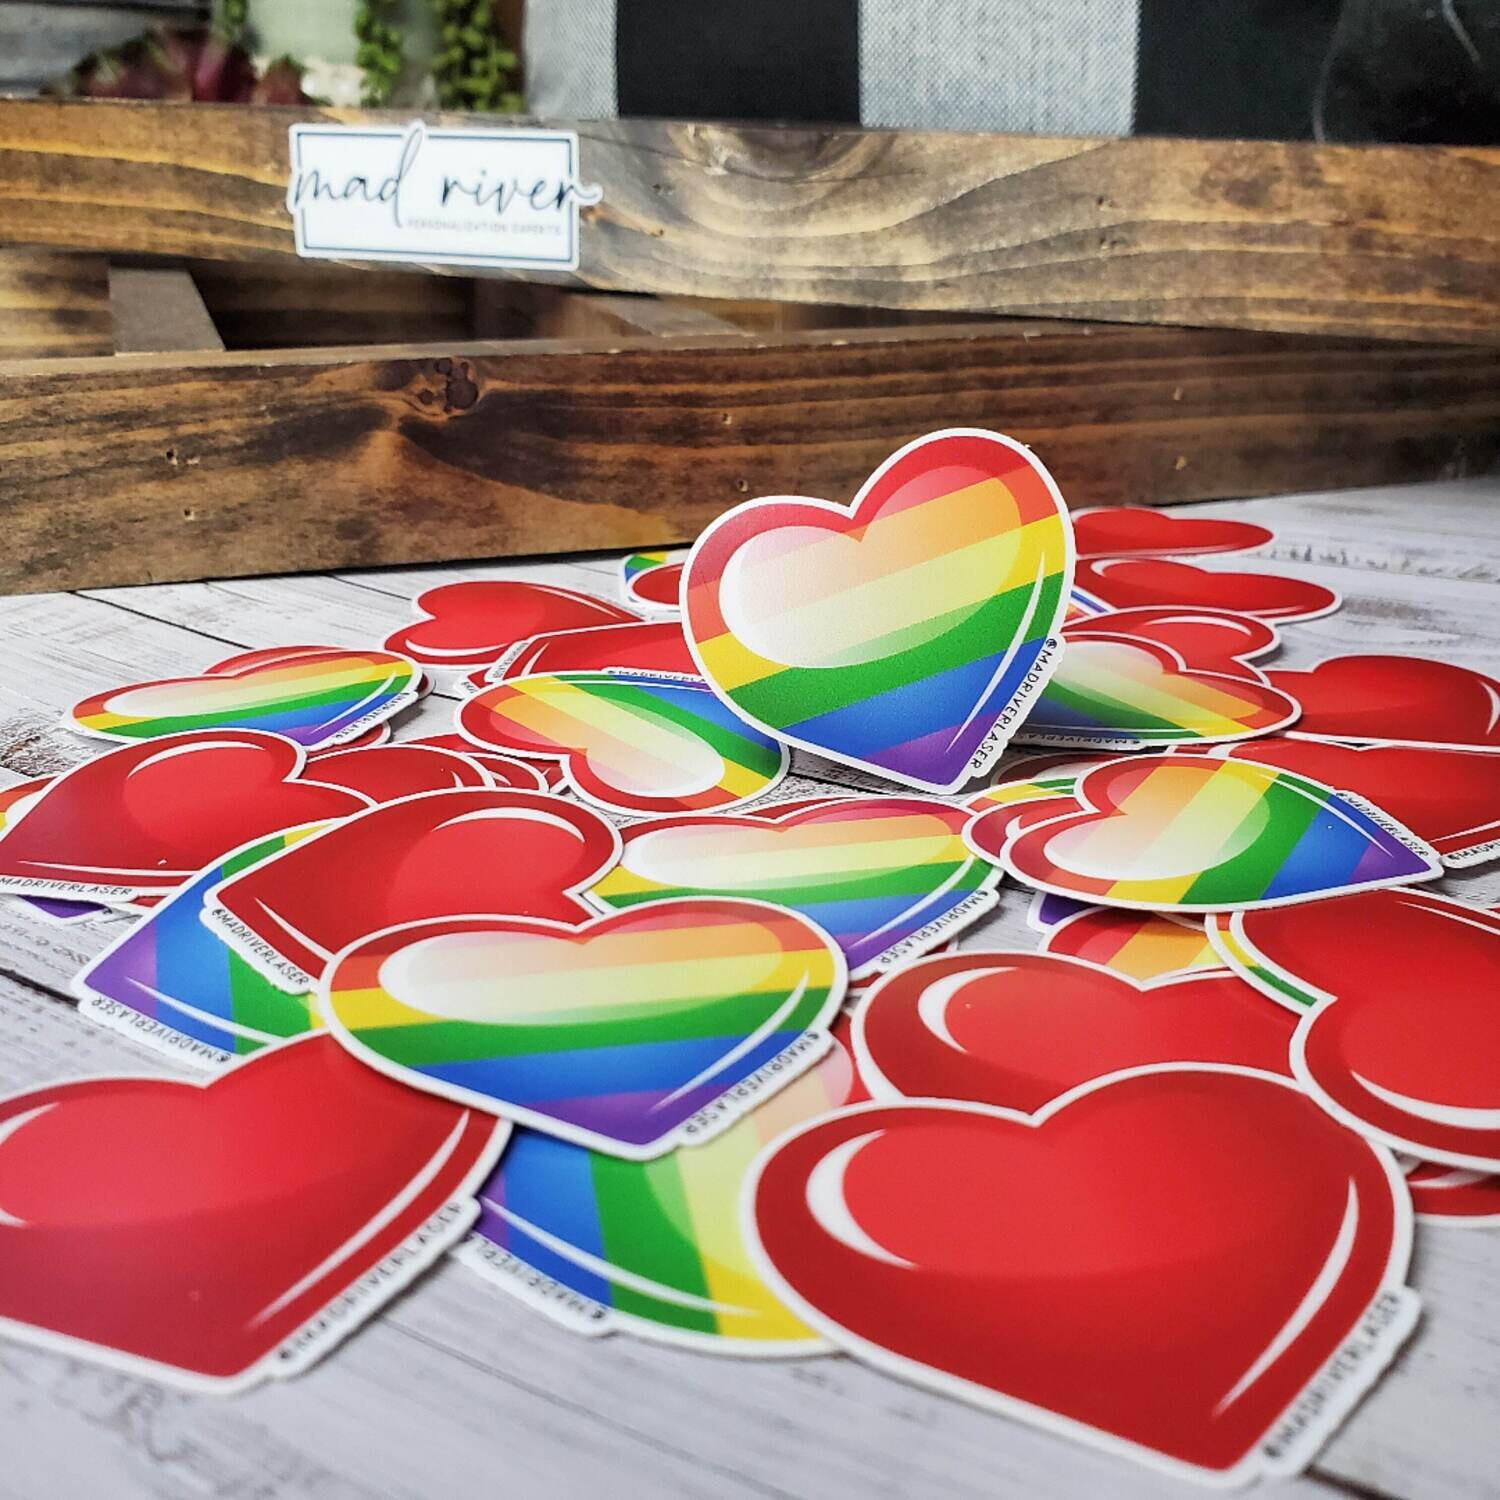 Rainbow Heart Sticker